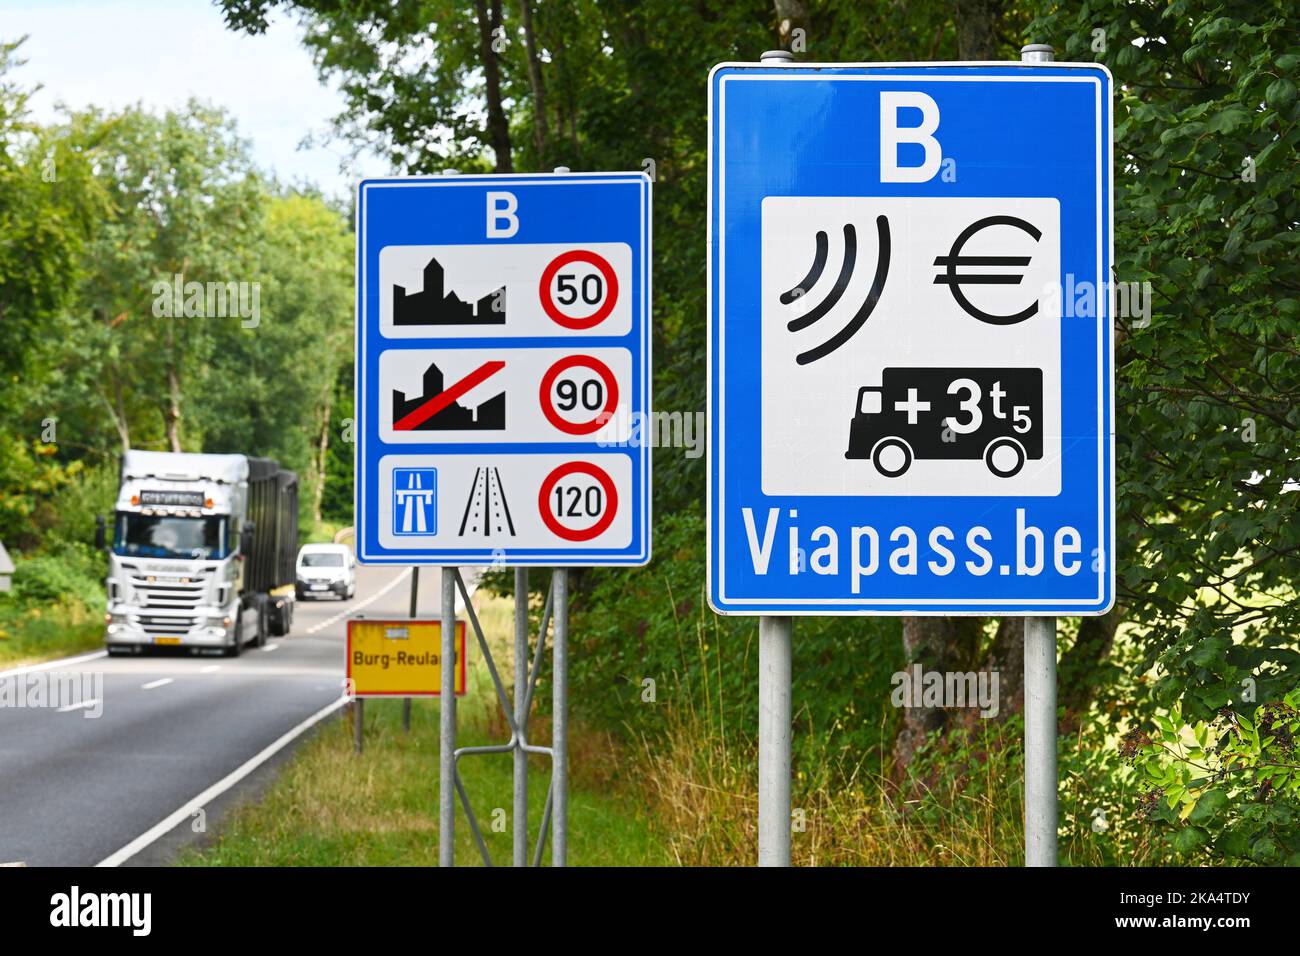 Sign Viapass Kilometer Charge for trucks of +3.5 tons. Stock Photo